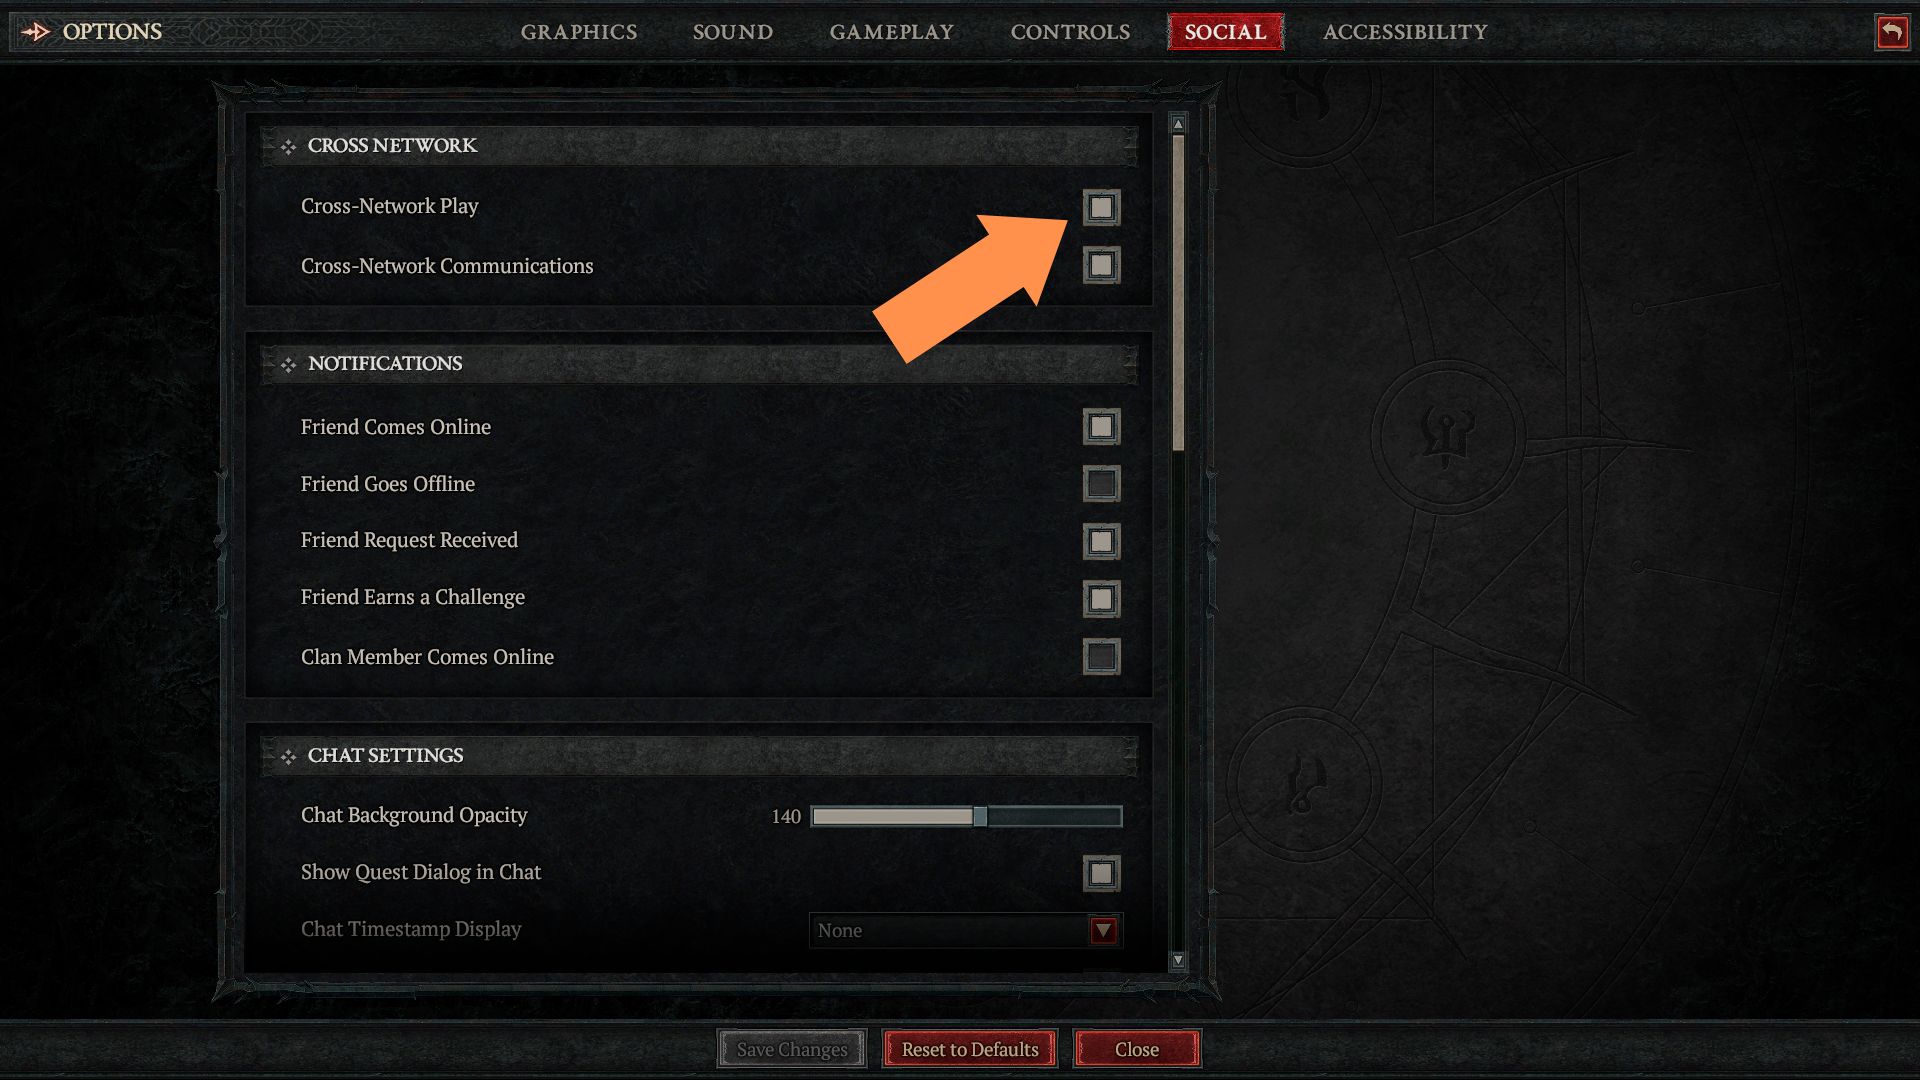 A screenshot of the settings menu in DIablo IV